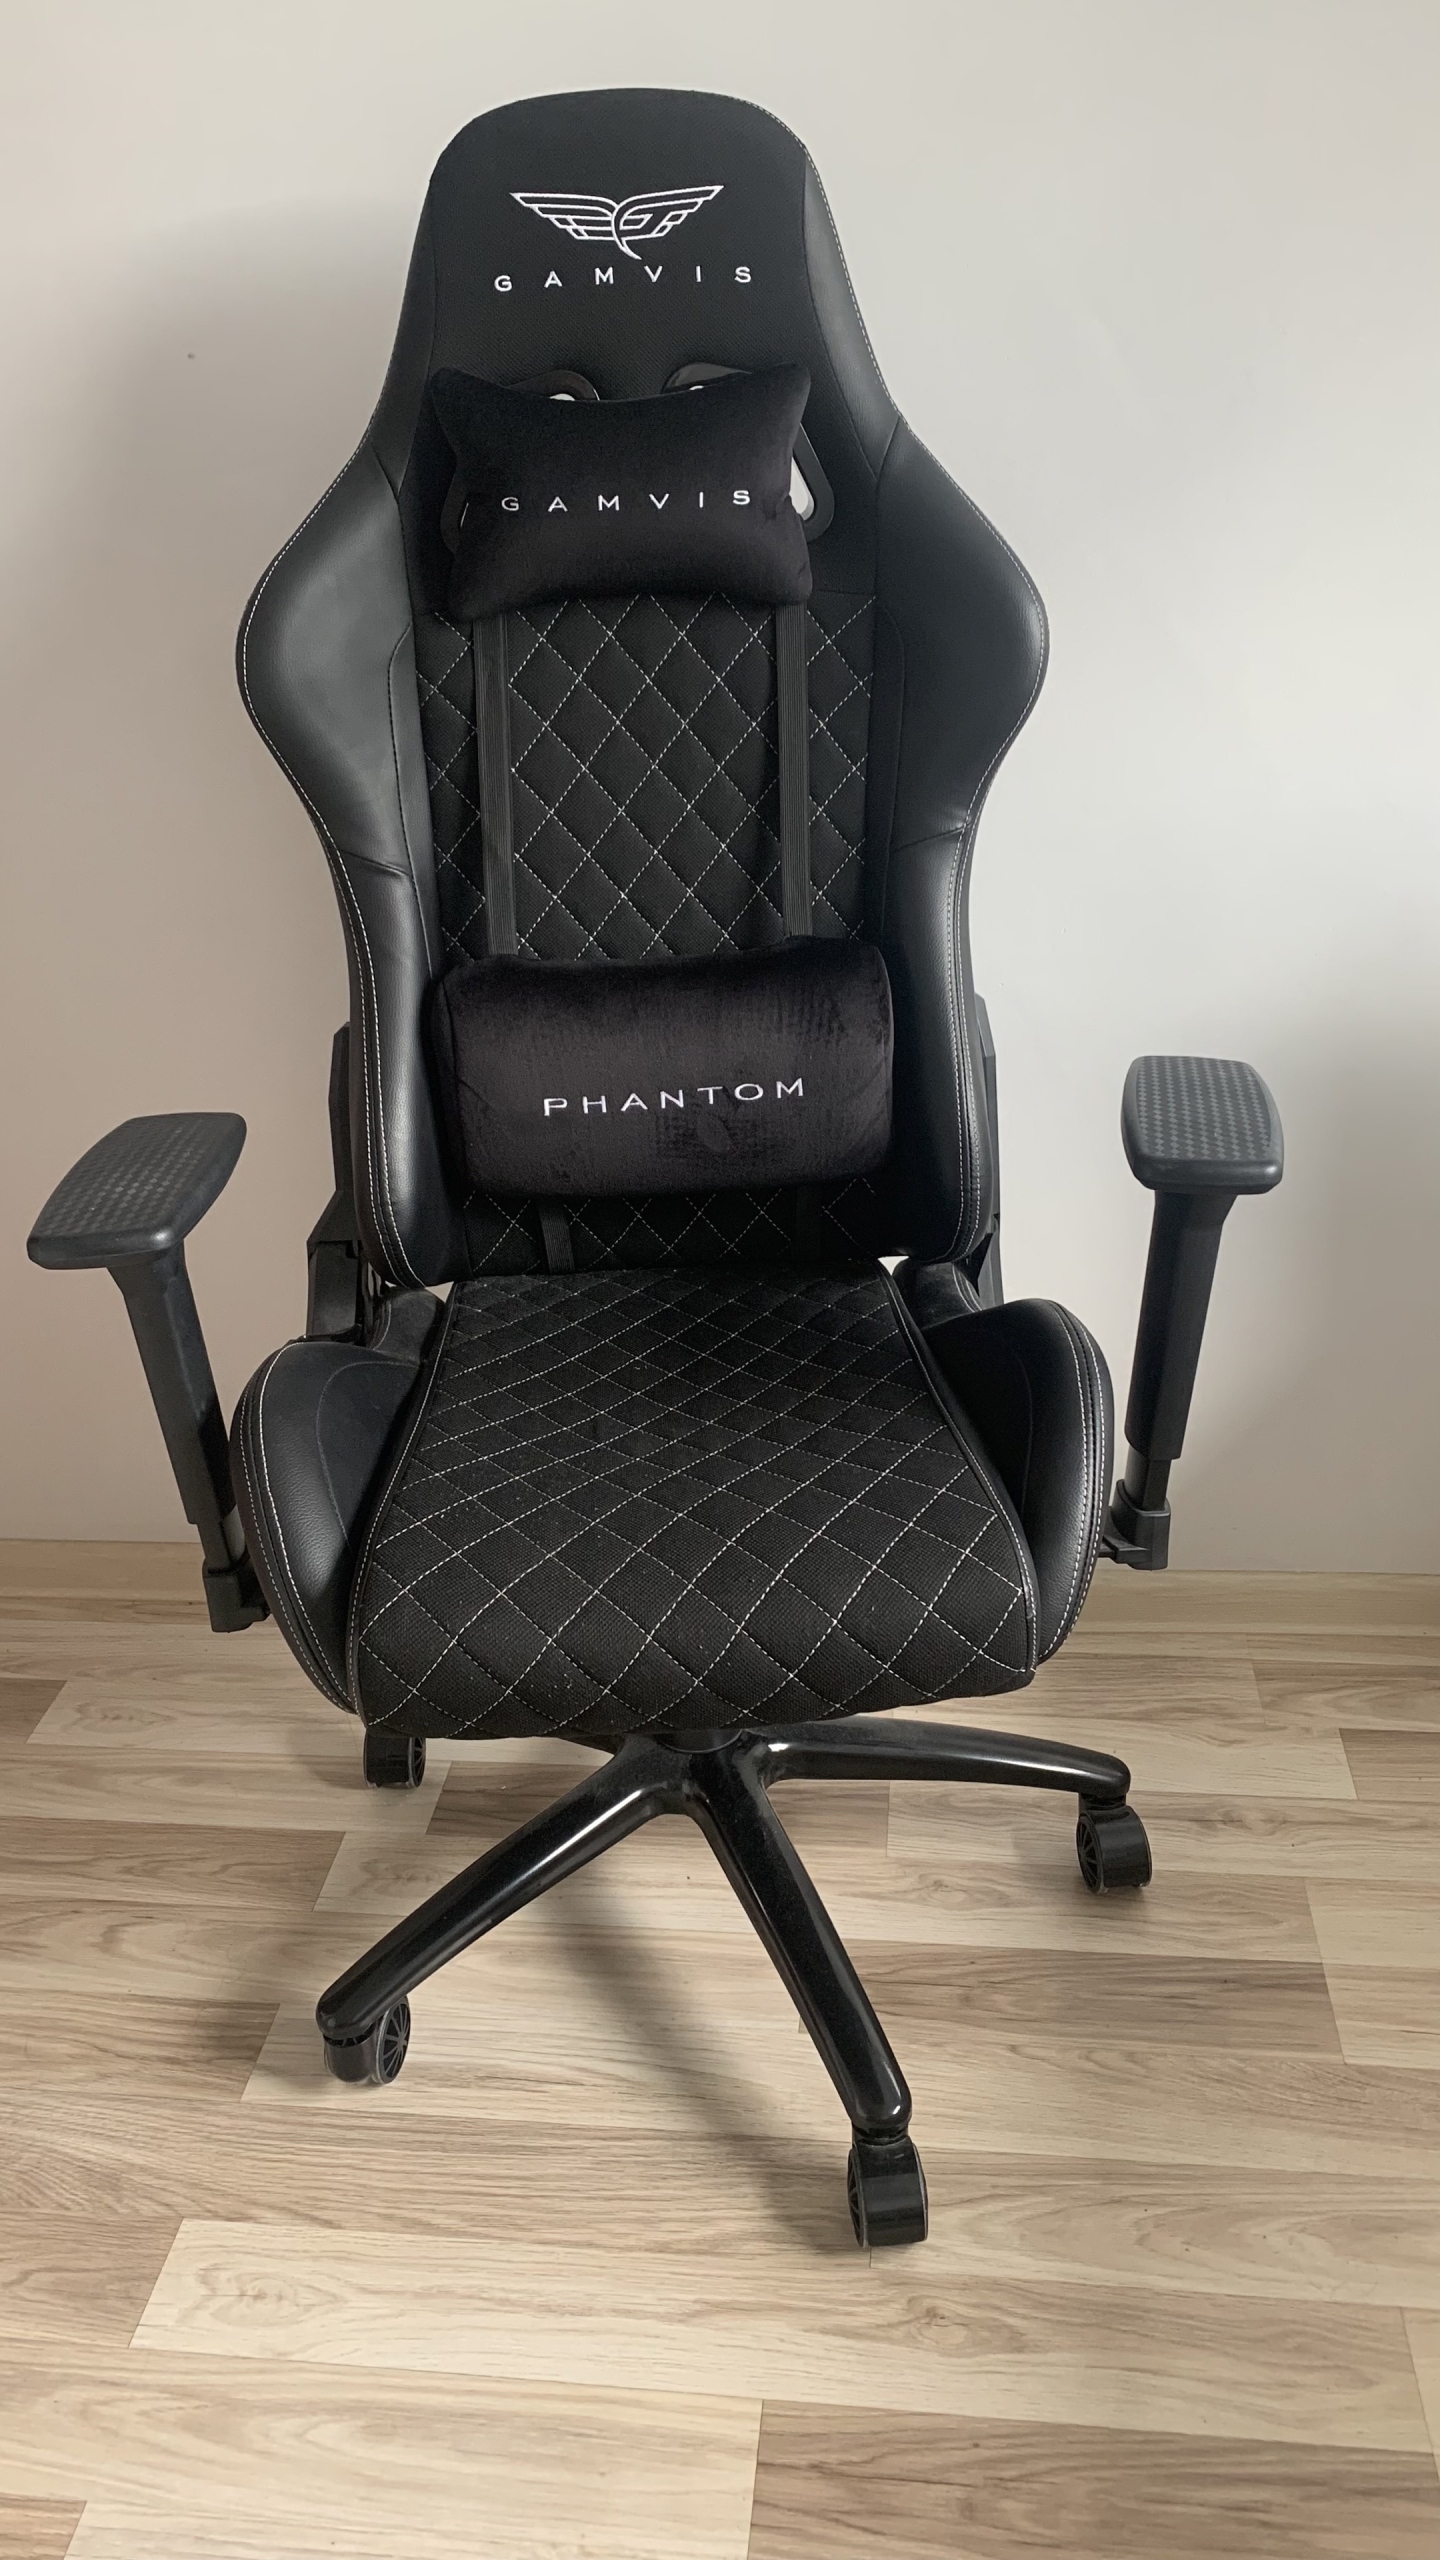 Gamvis PHANTOM Fabric Gaming Chair - Black/Blue - Gamvis Gaming Chairs